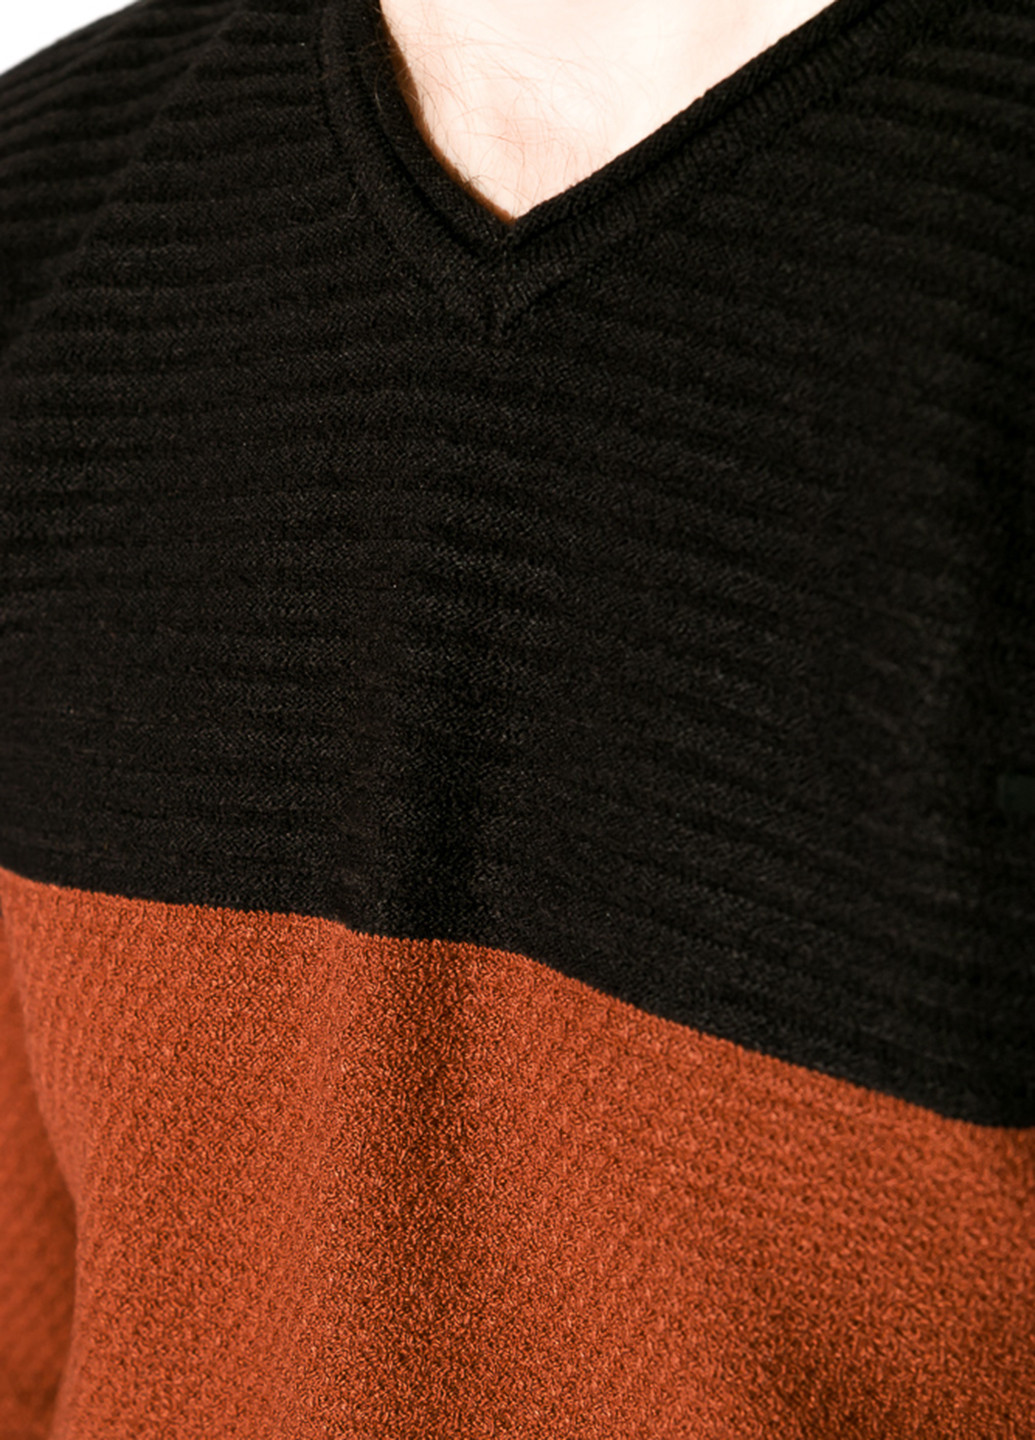 Терракотовый демисезонный пуловер пуловер Time of Style